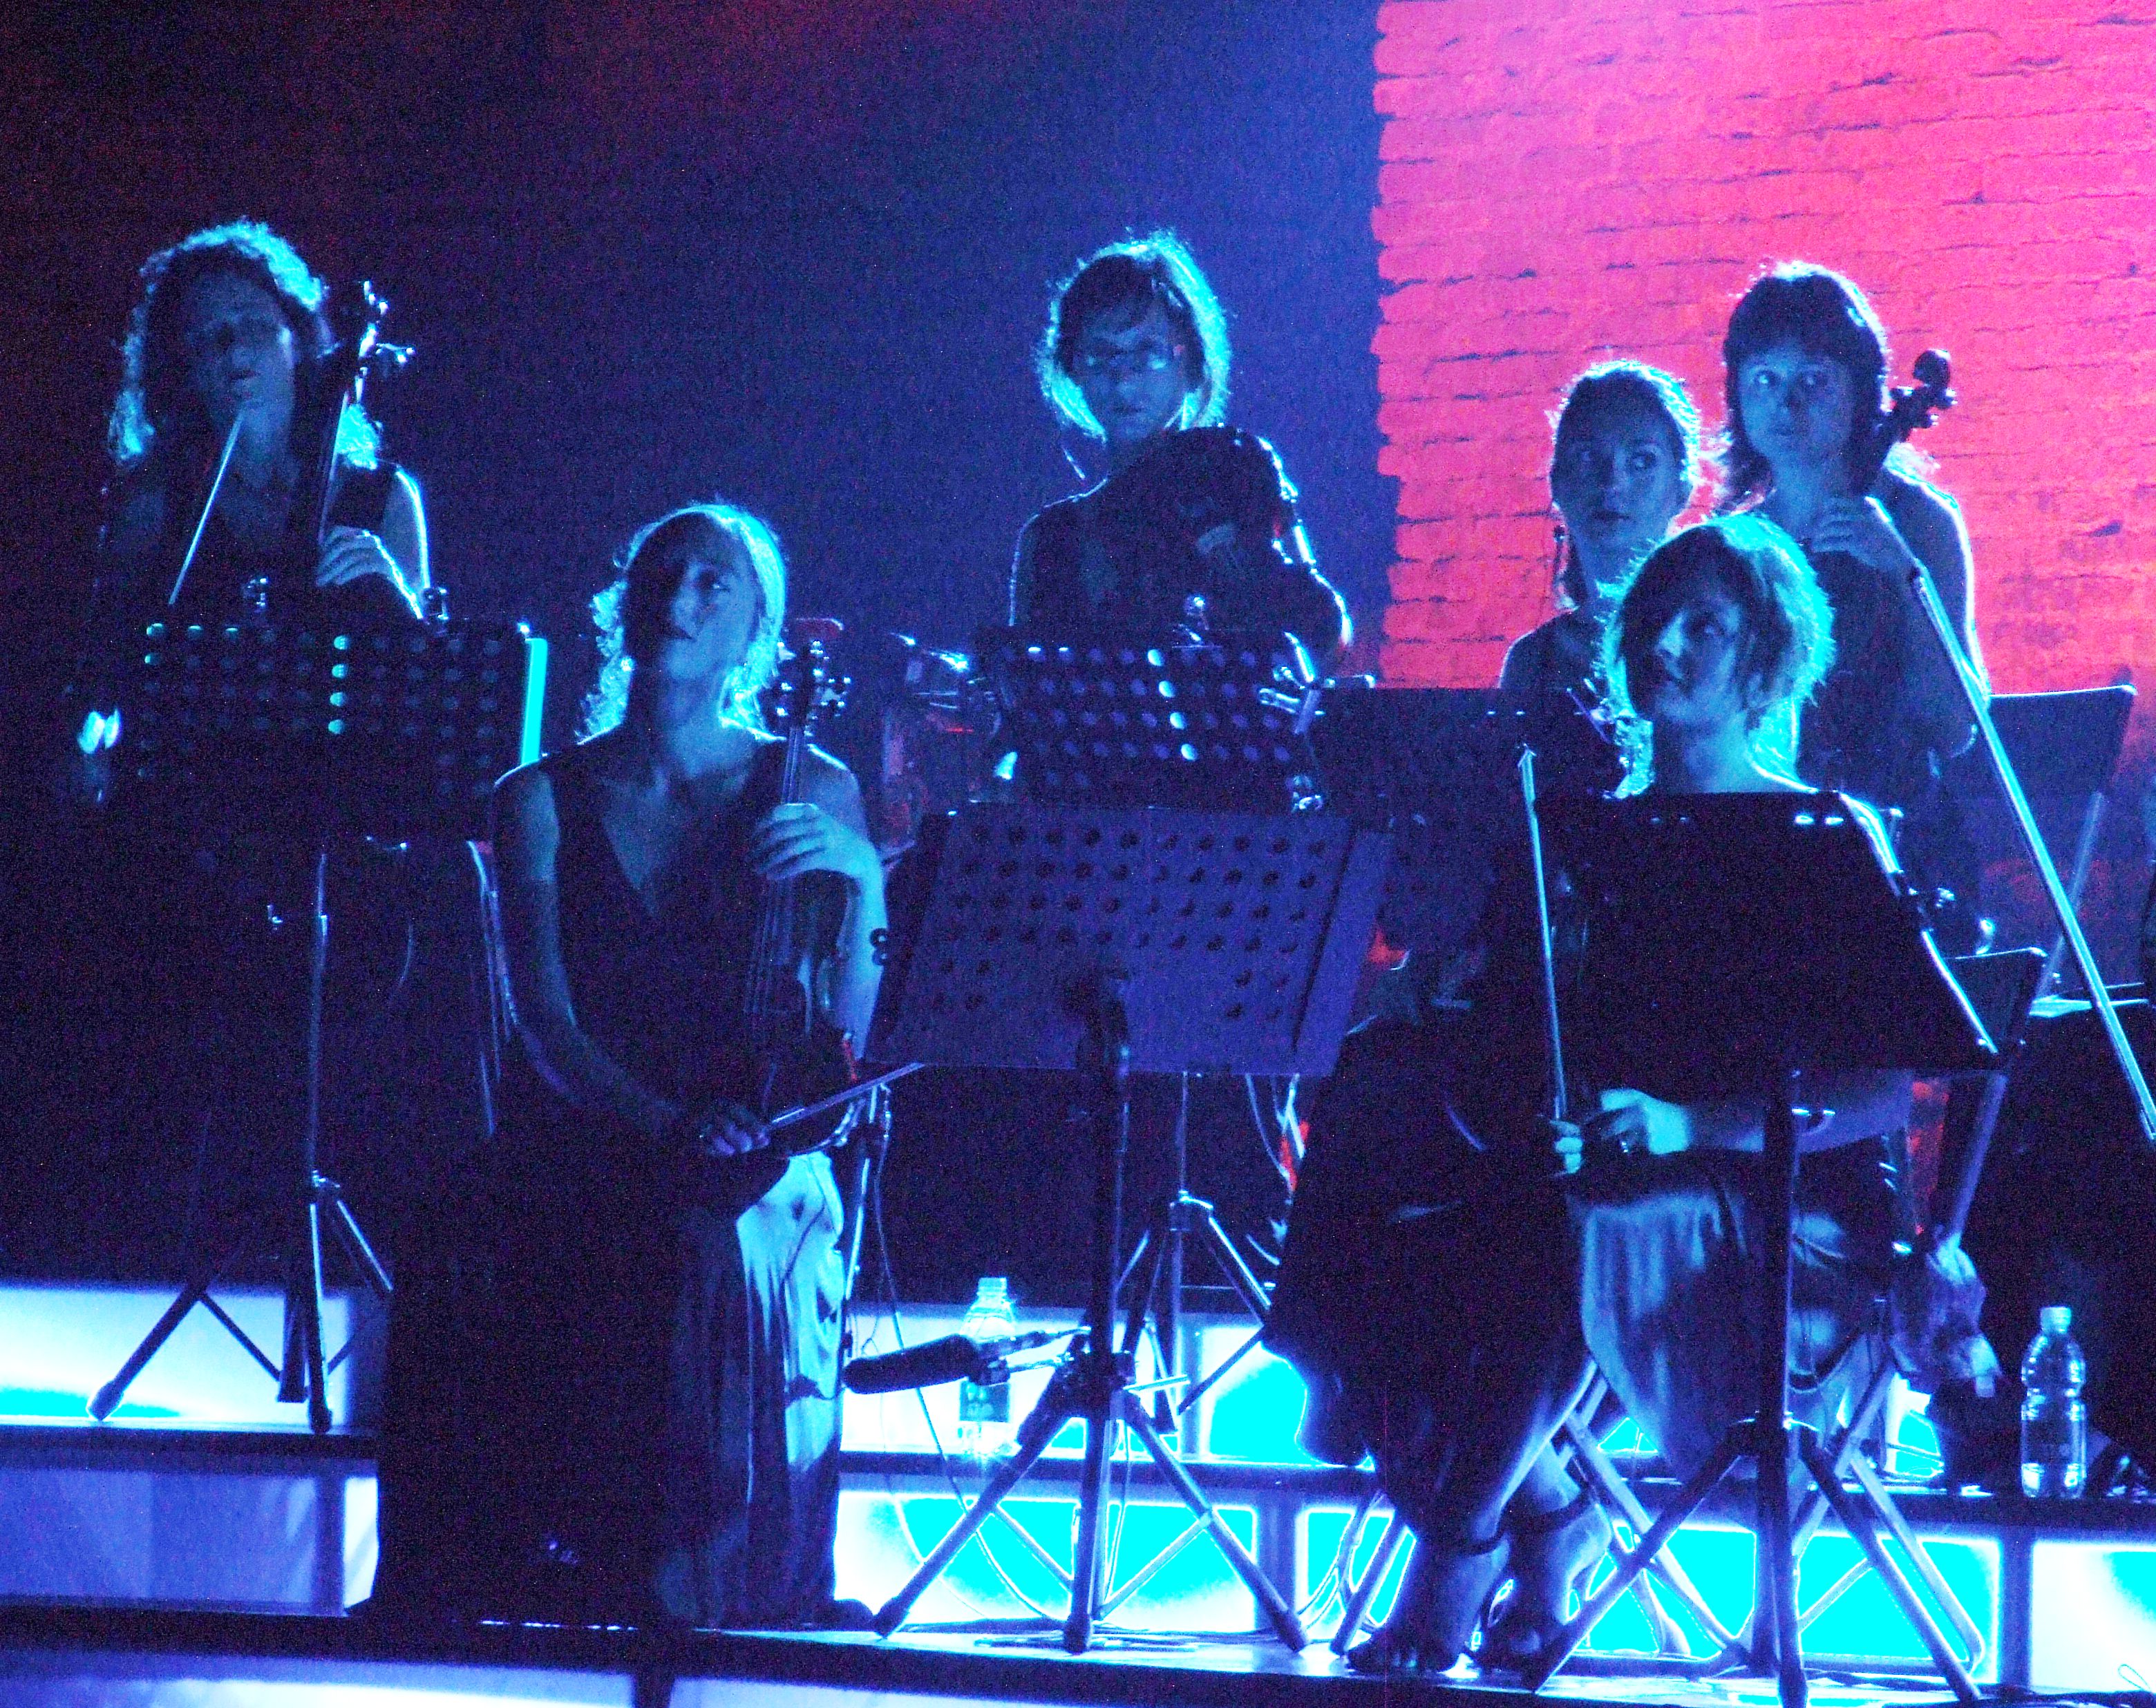 Massimo ranieri concert 2009 taormina-sicilia-italy - creative commons by gnuckx photo